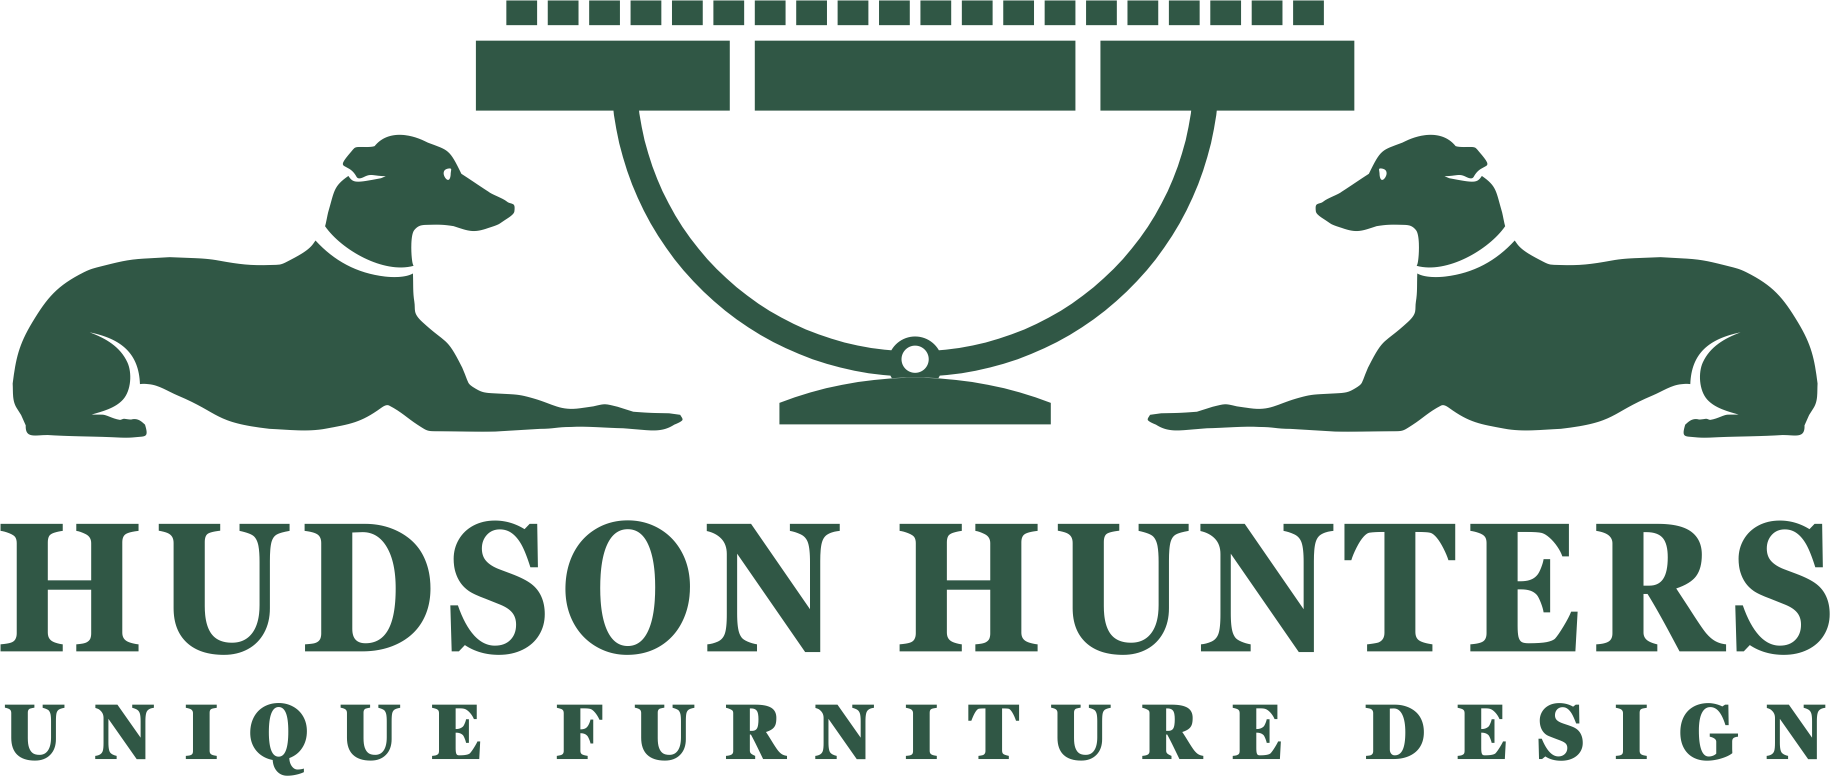 Hudson Hunters